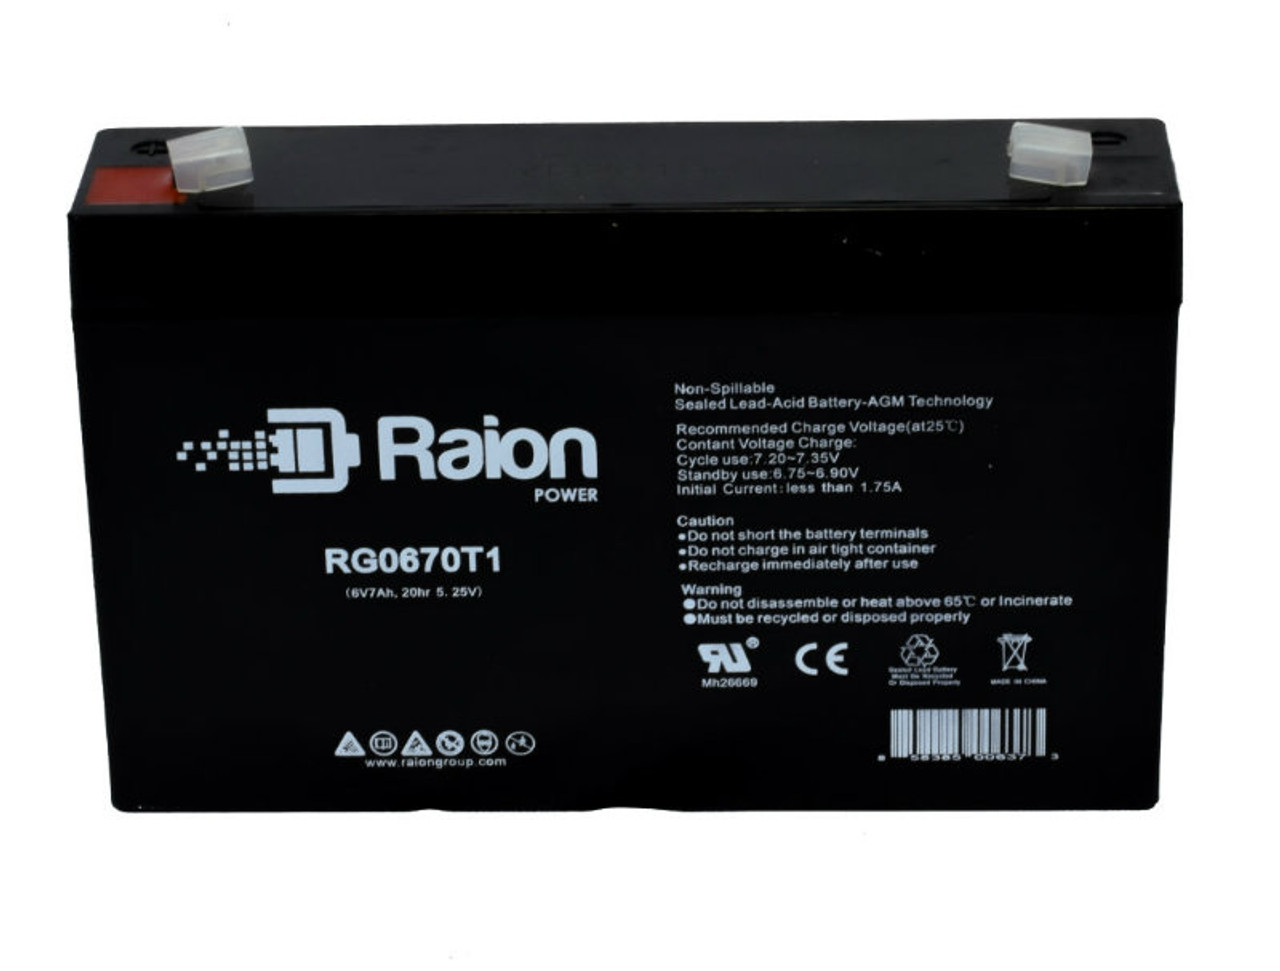 Raion Power RG0670T1 SLA Battery for PM PM670 OEM Battery